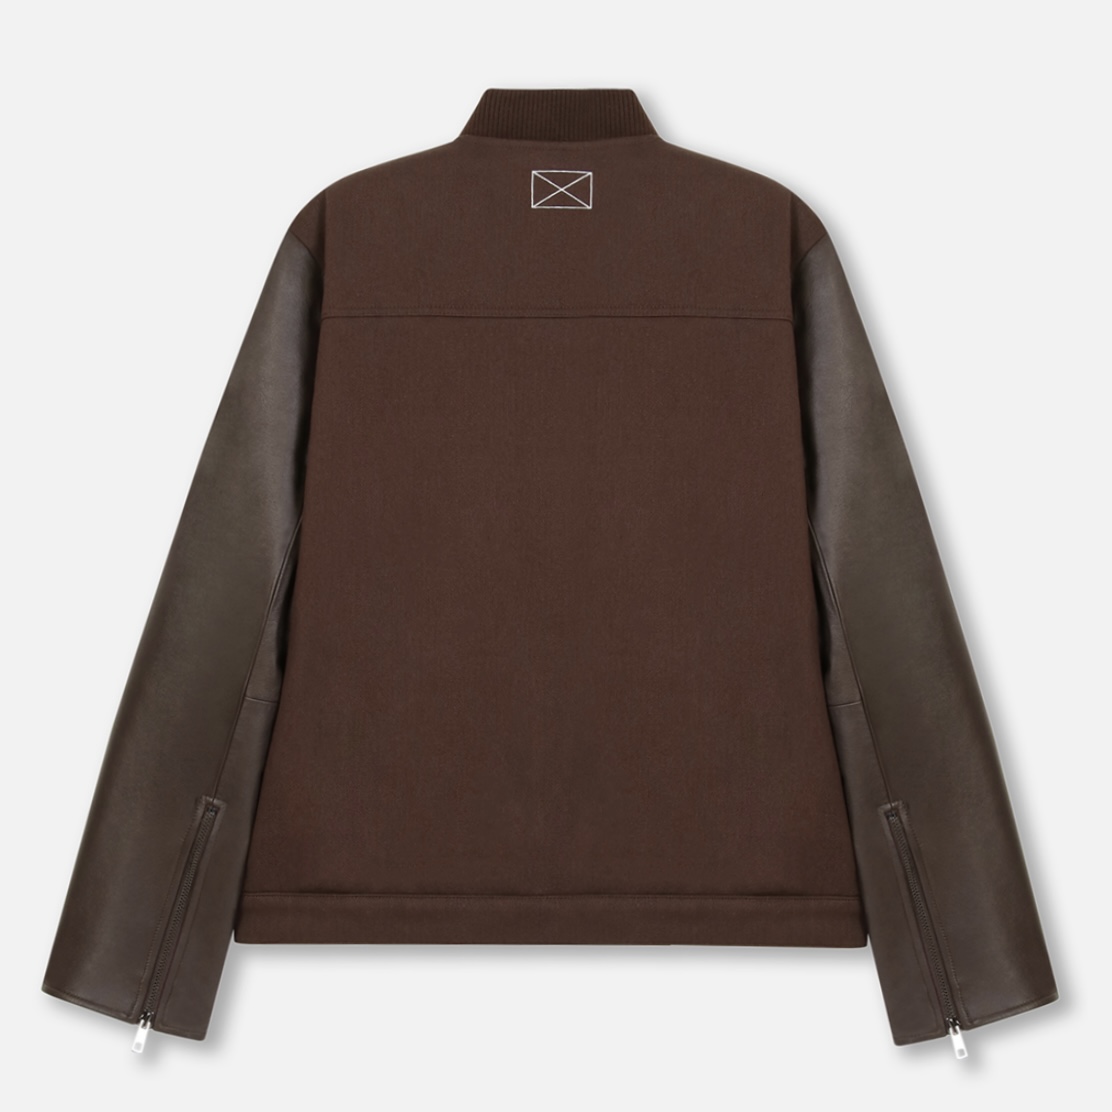 MLVINCE beringer leather sleeve jacketSLEEVECOWLEATHE